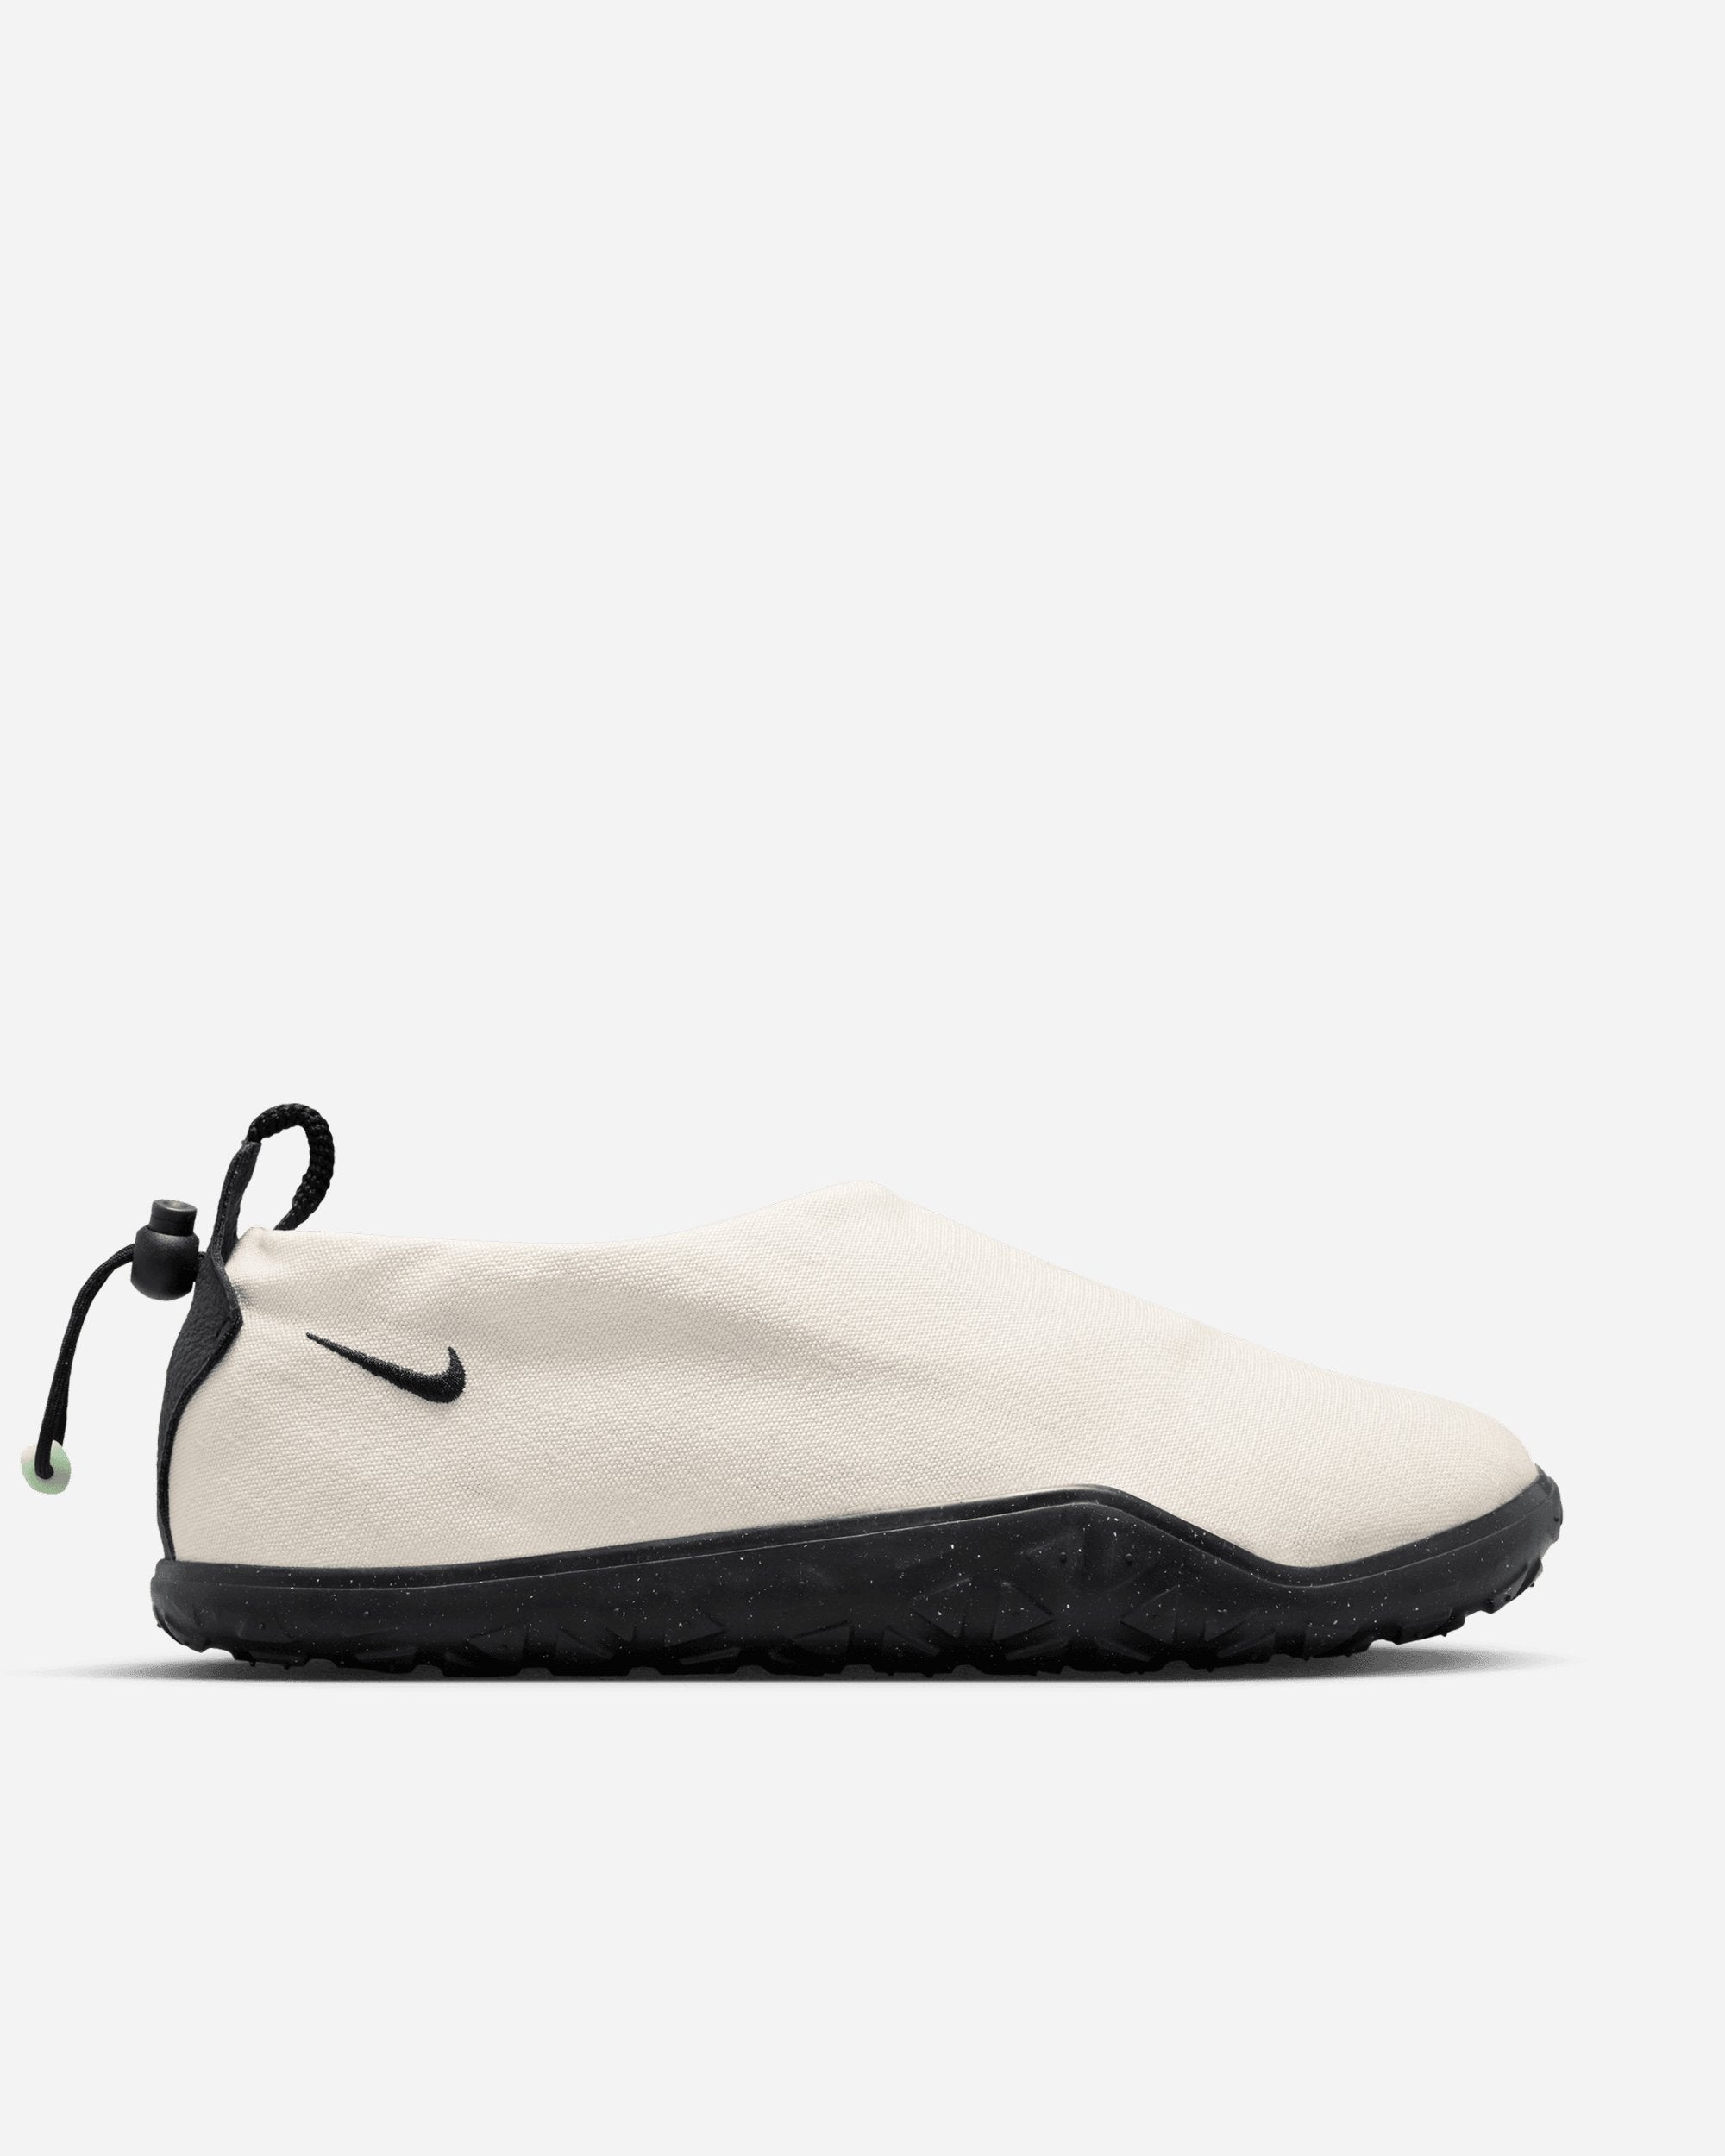 Nike ACG Moc SUMMIT WHITE/BLACK-SUMMIT WHIT DZ3407-100